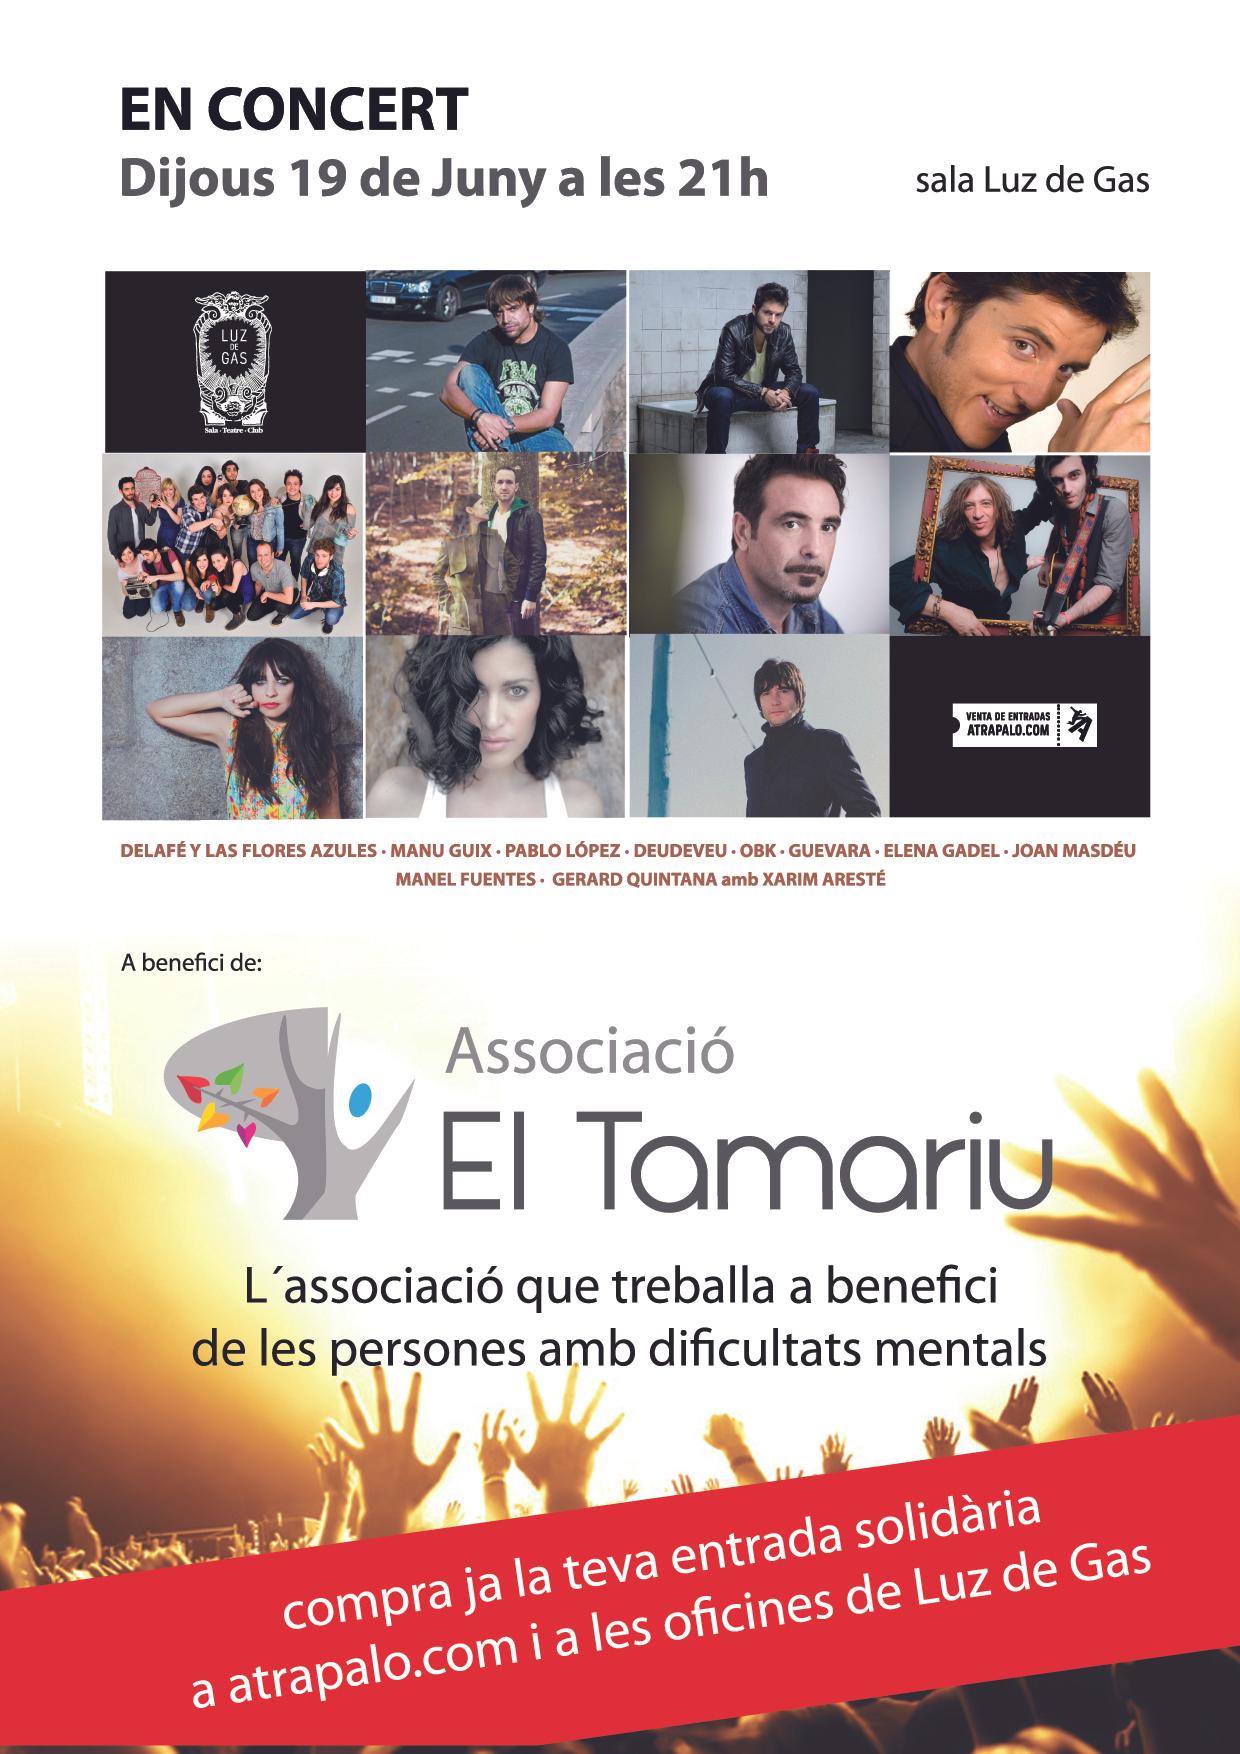 Associació El Tamariu - Concierto benéfico